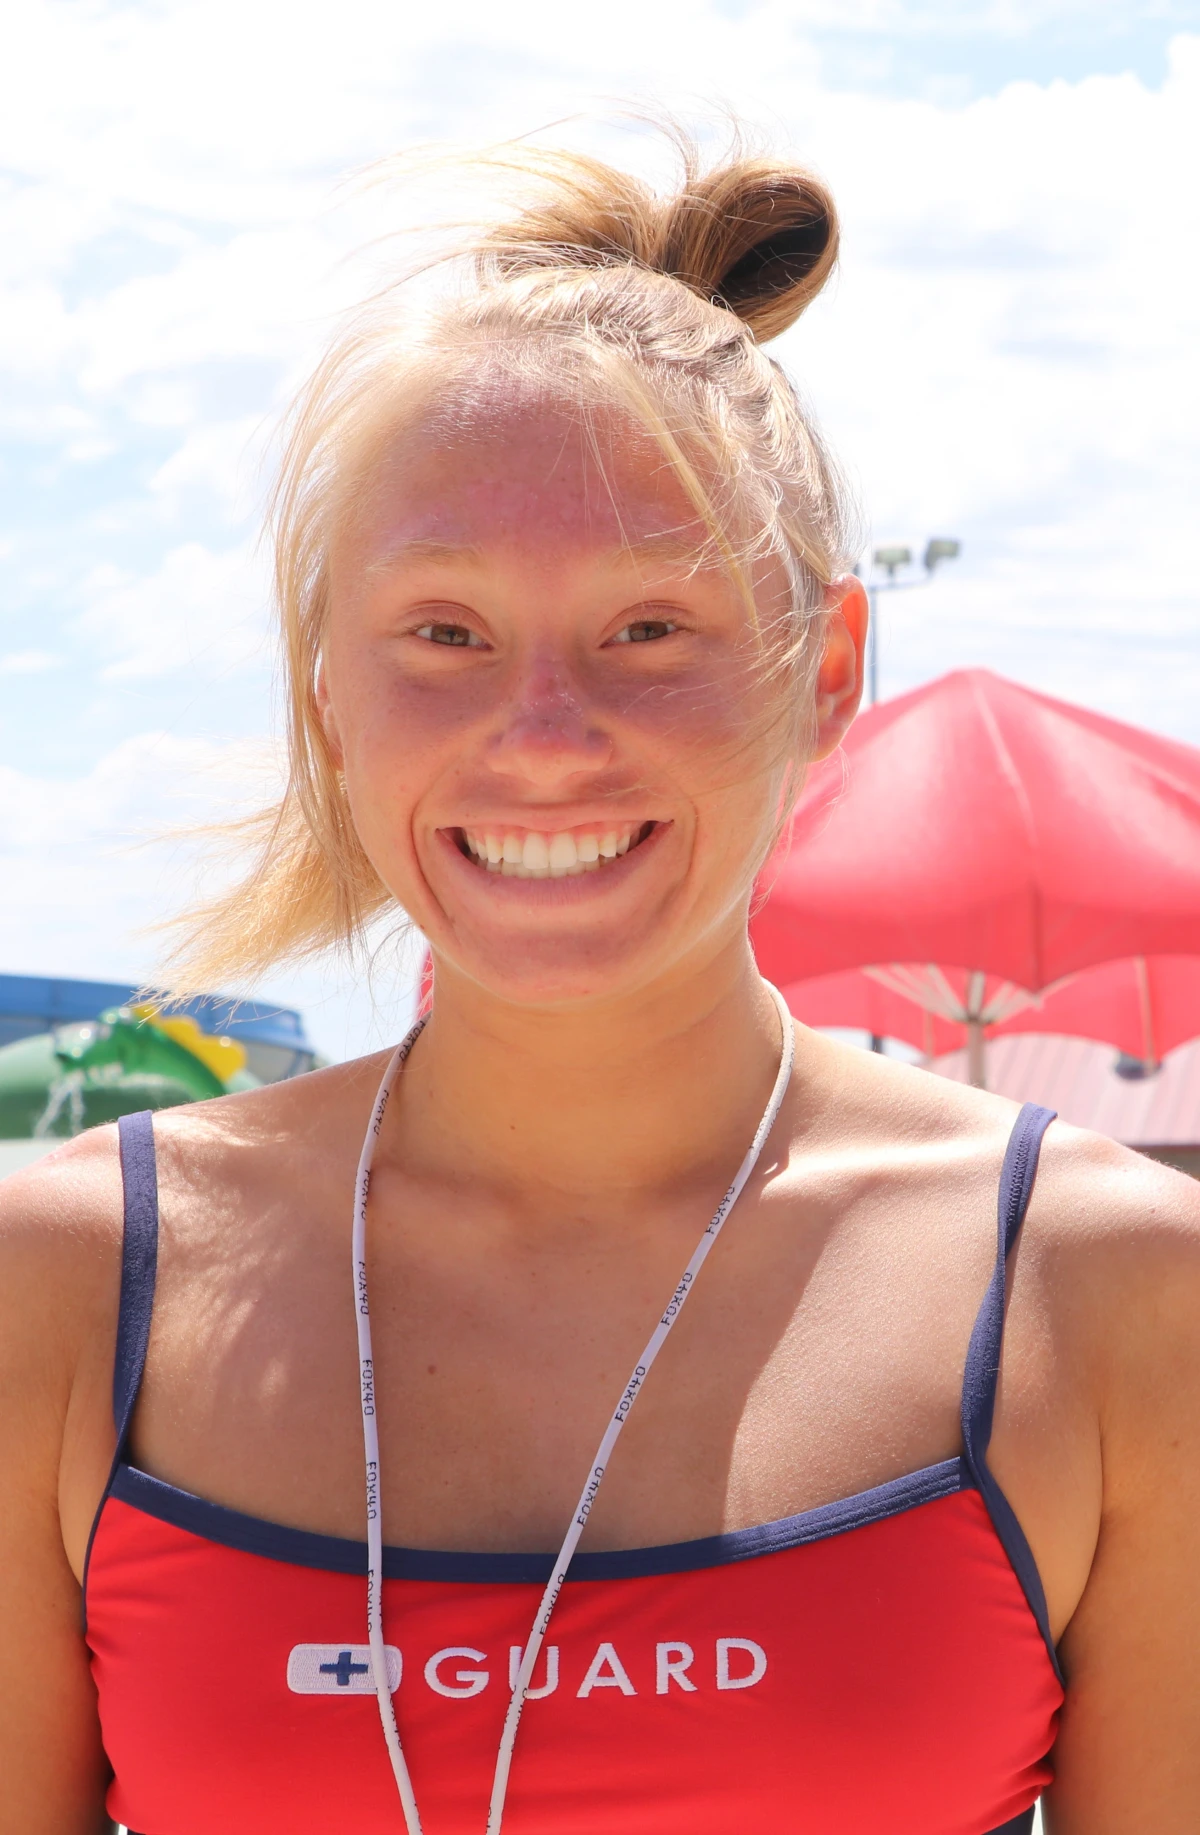 Meet FFAC Lifeguard Sydney Mosinski